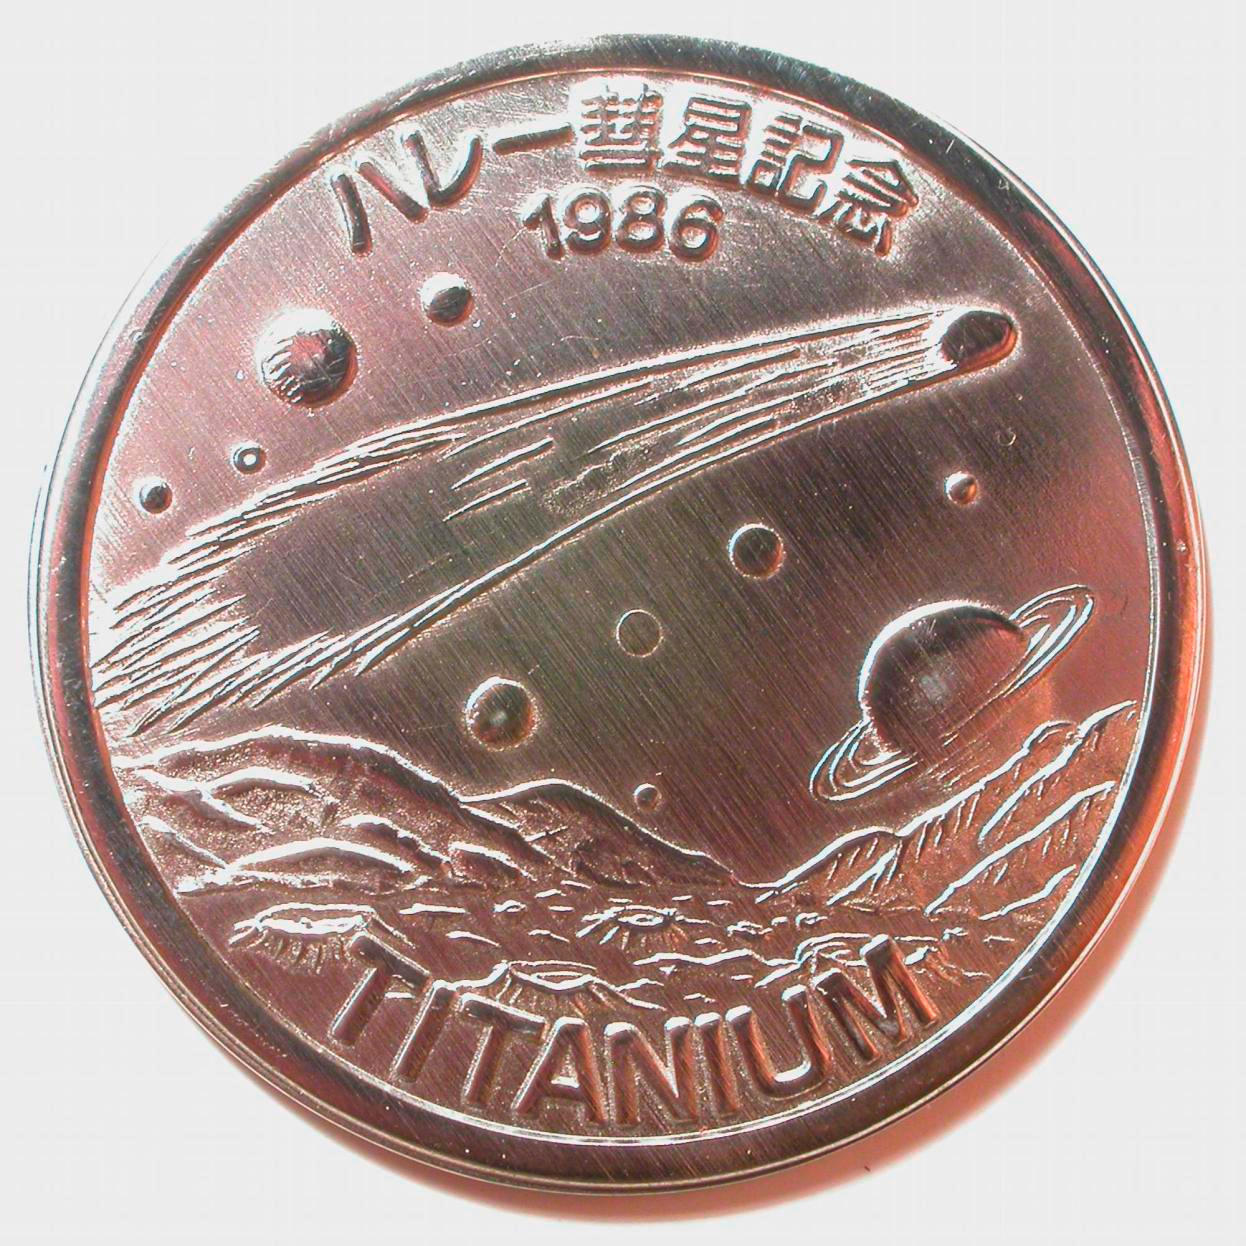 Titanium Haley's Comet commemorative medallion